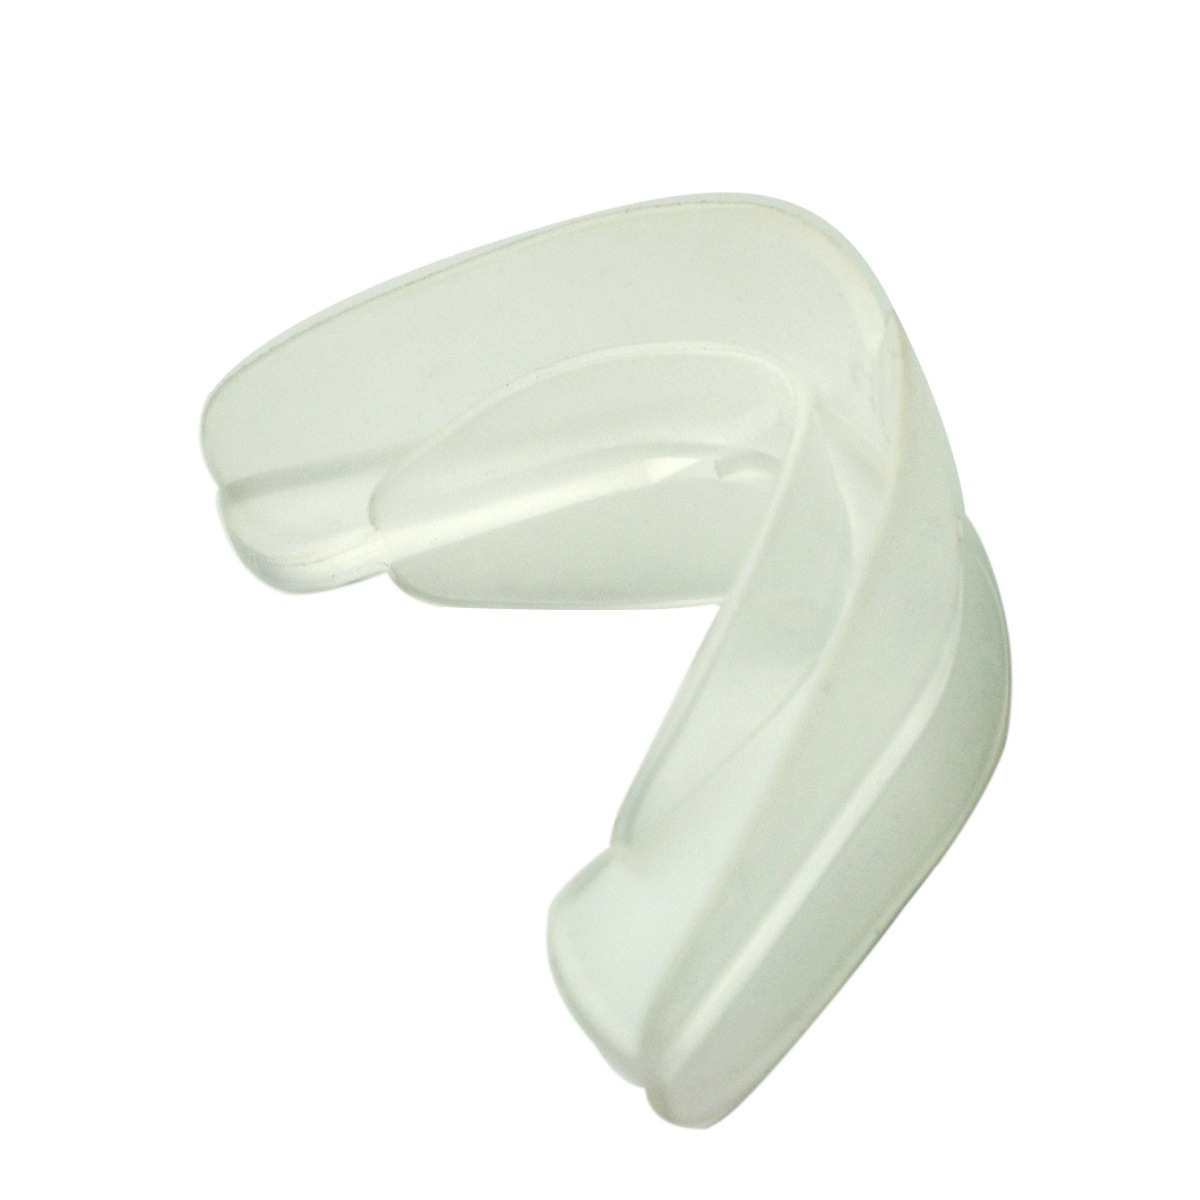 Grin365 termoplast Custom Dual Arch Mouth Tray